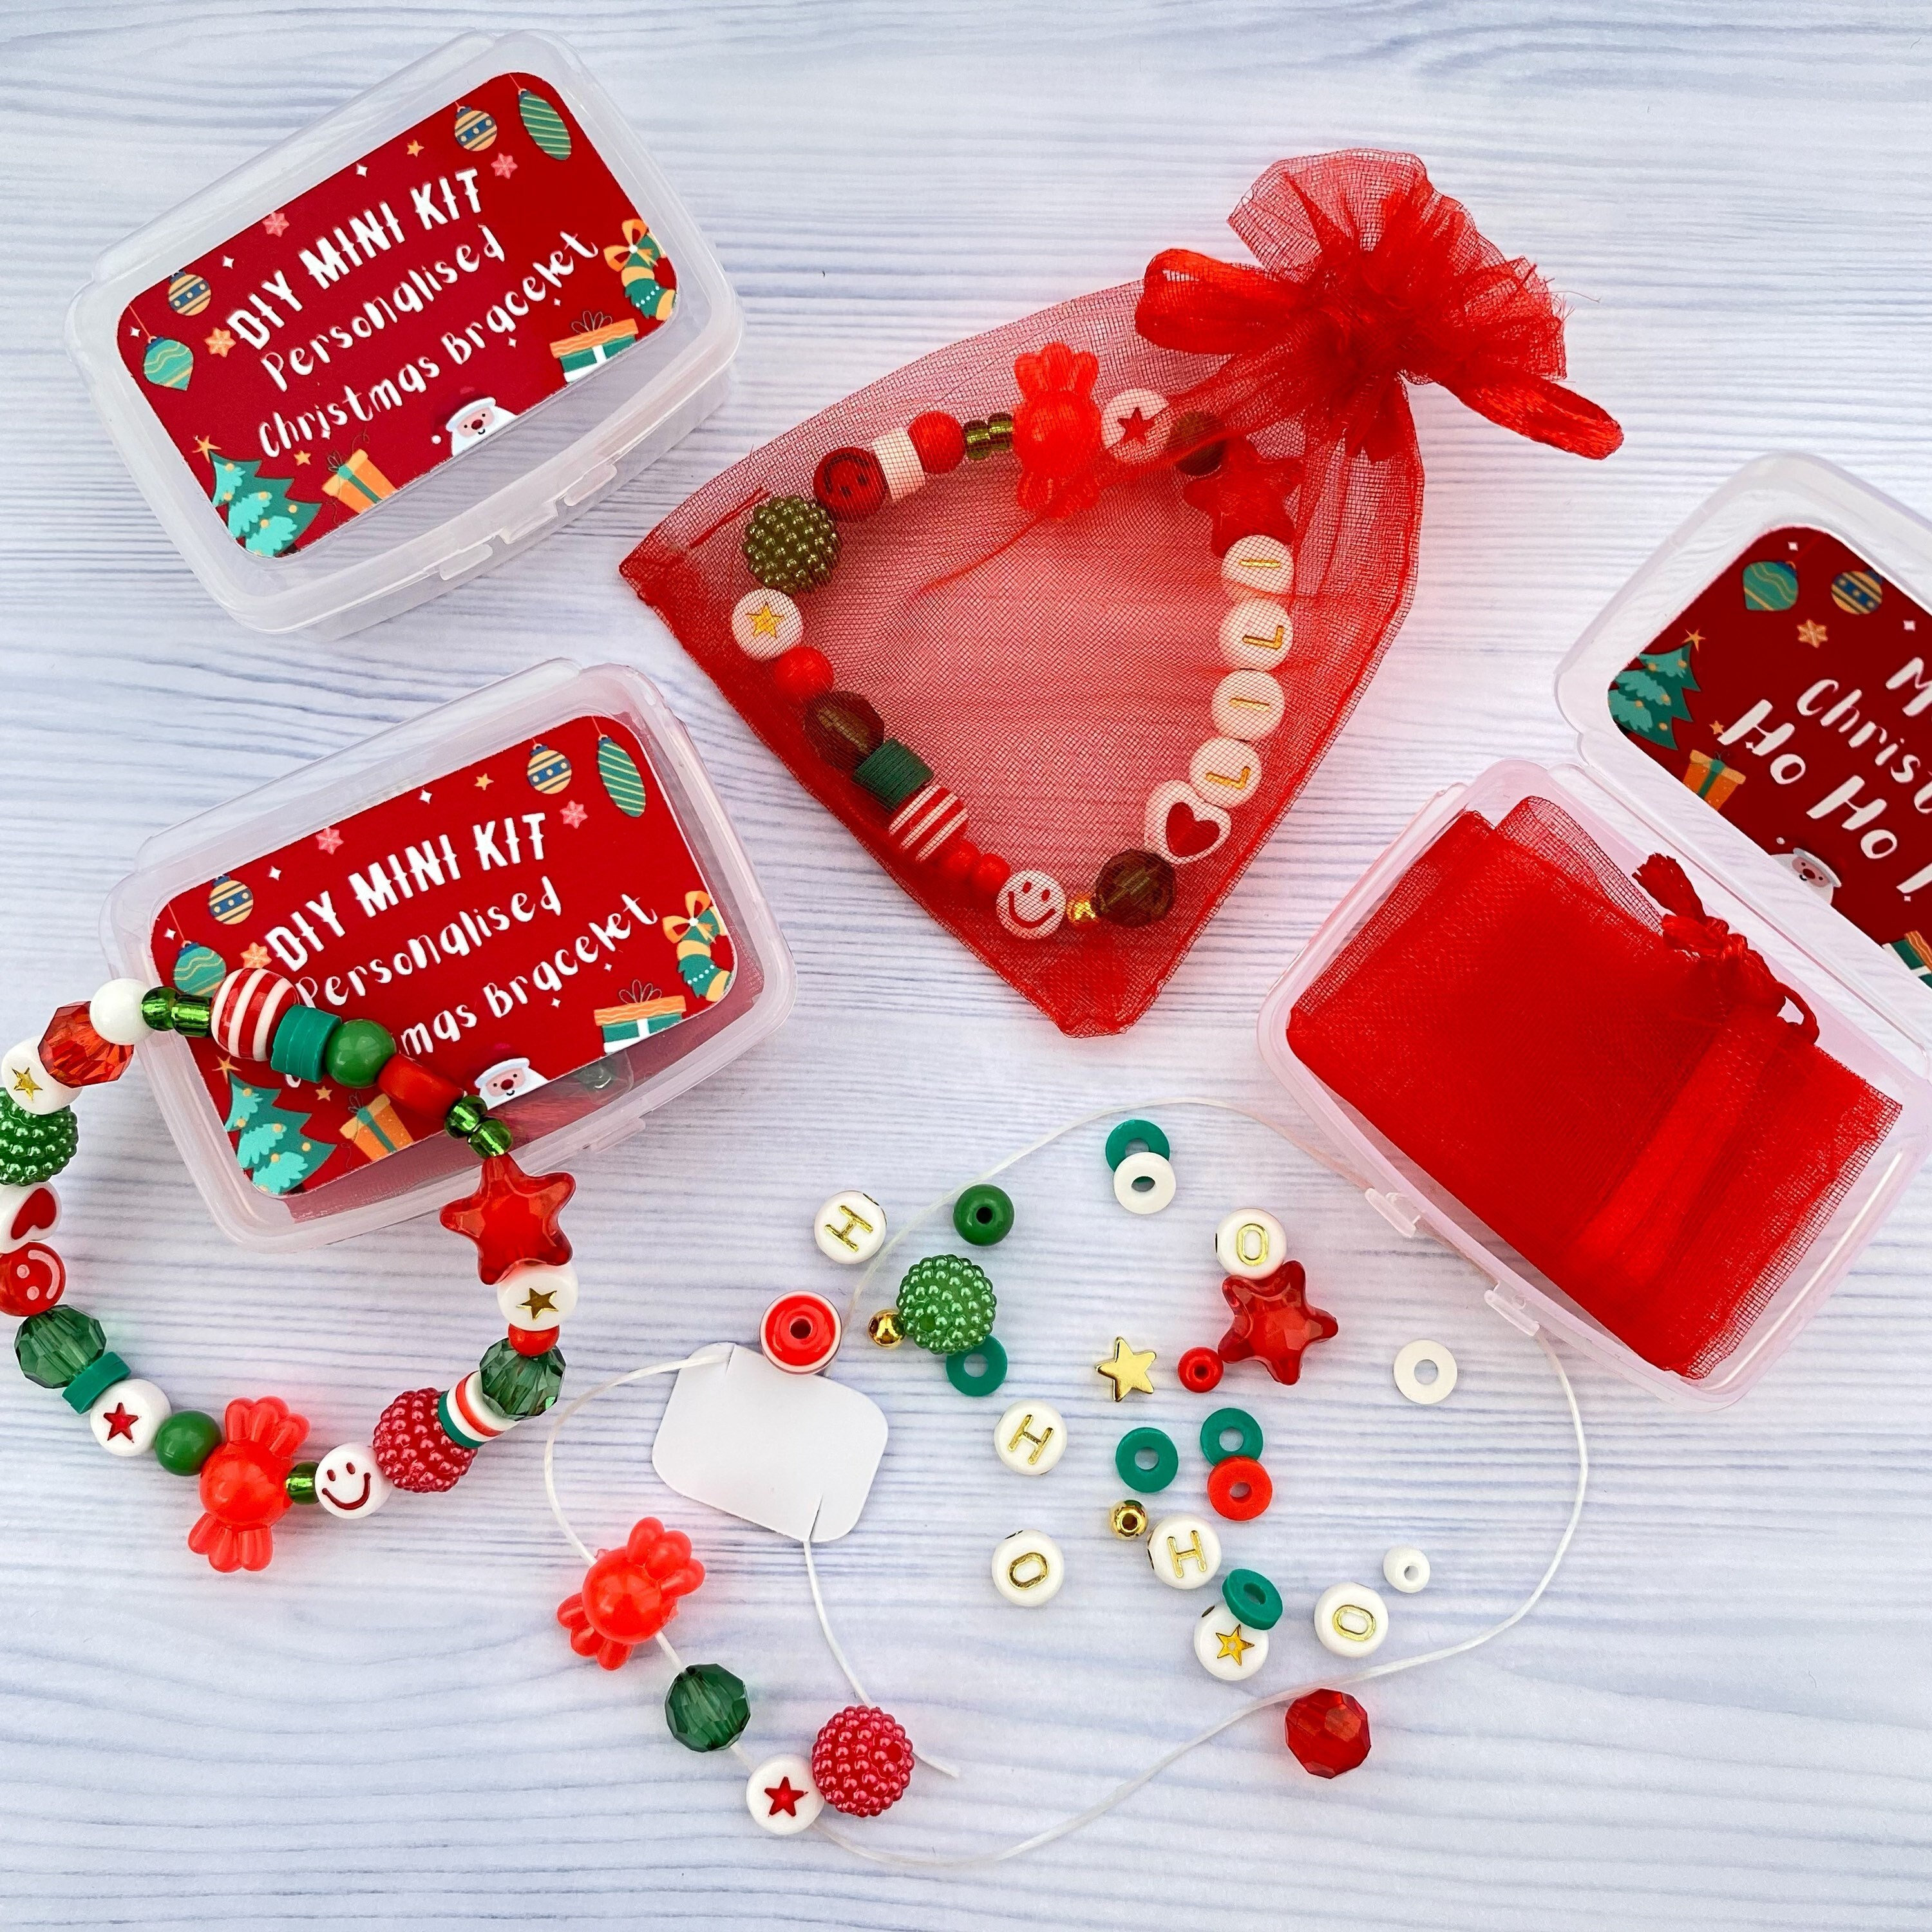 DIY Little Girl Bracelets Making Kit Girl Party Activity Box Craft  Personalized Jewelry Making Kit for Girls DIY Stretchy Name Bracelet -   Sweden